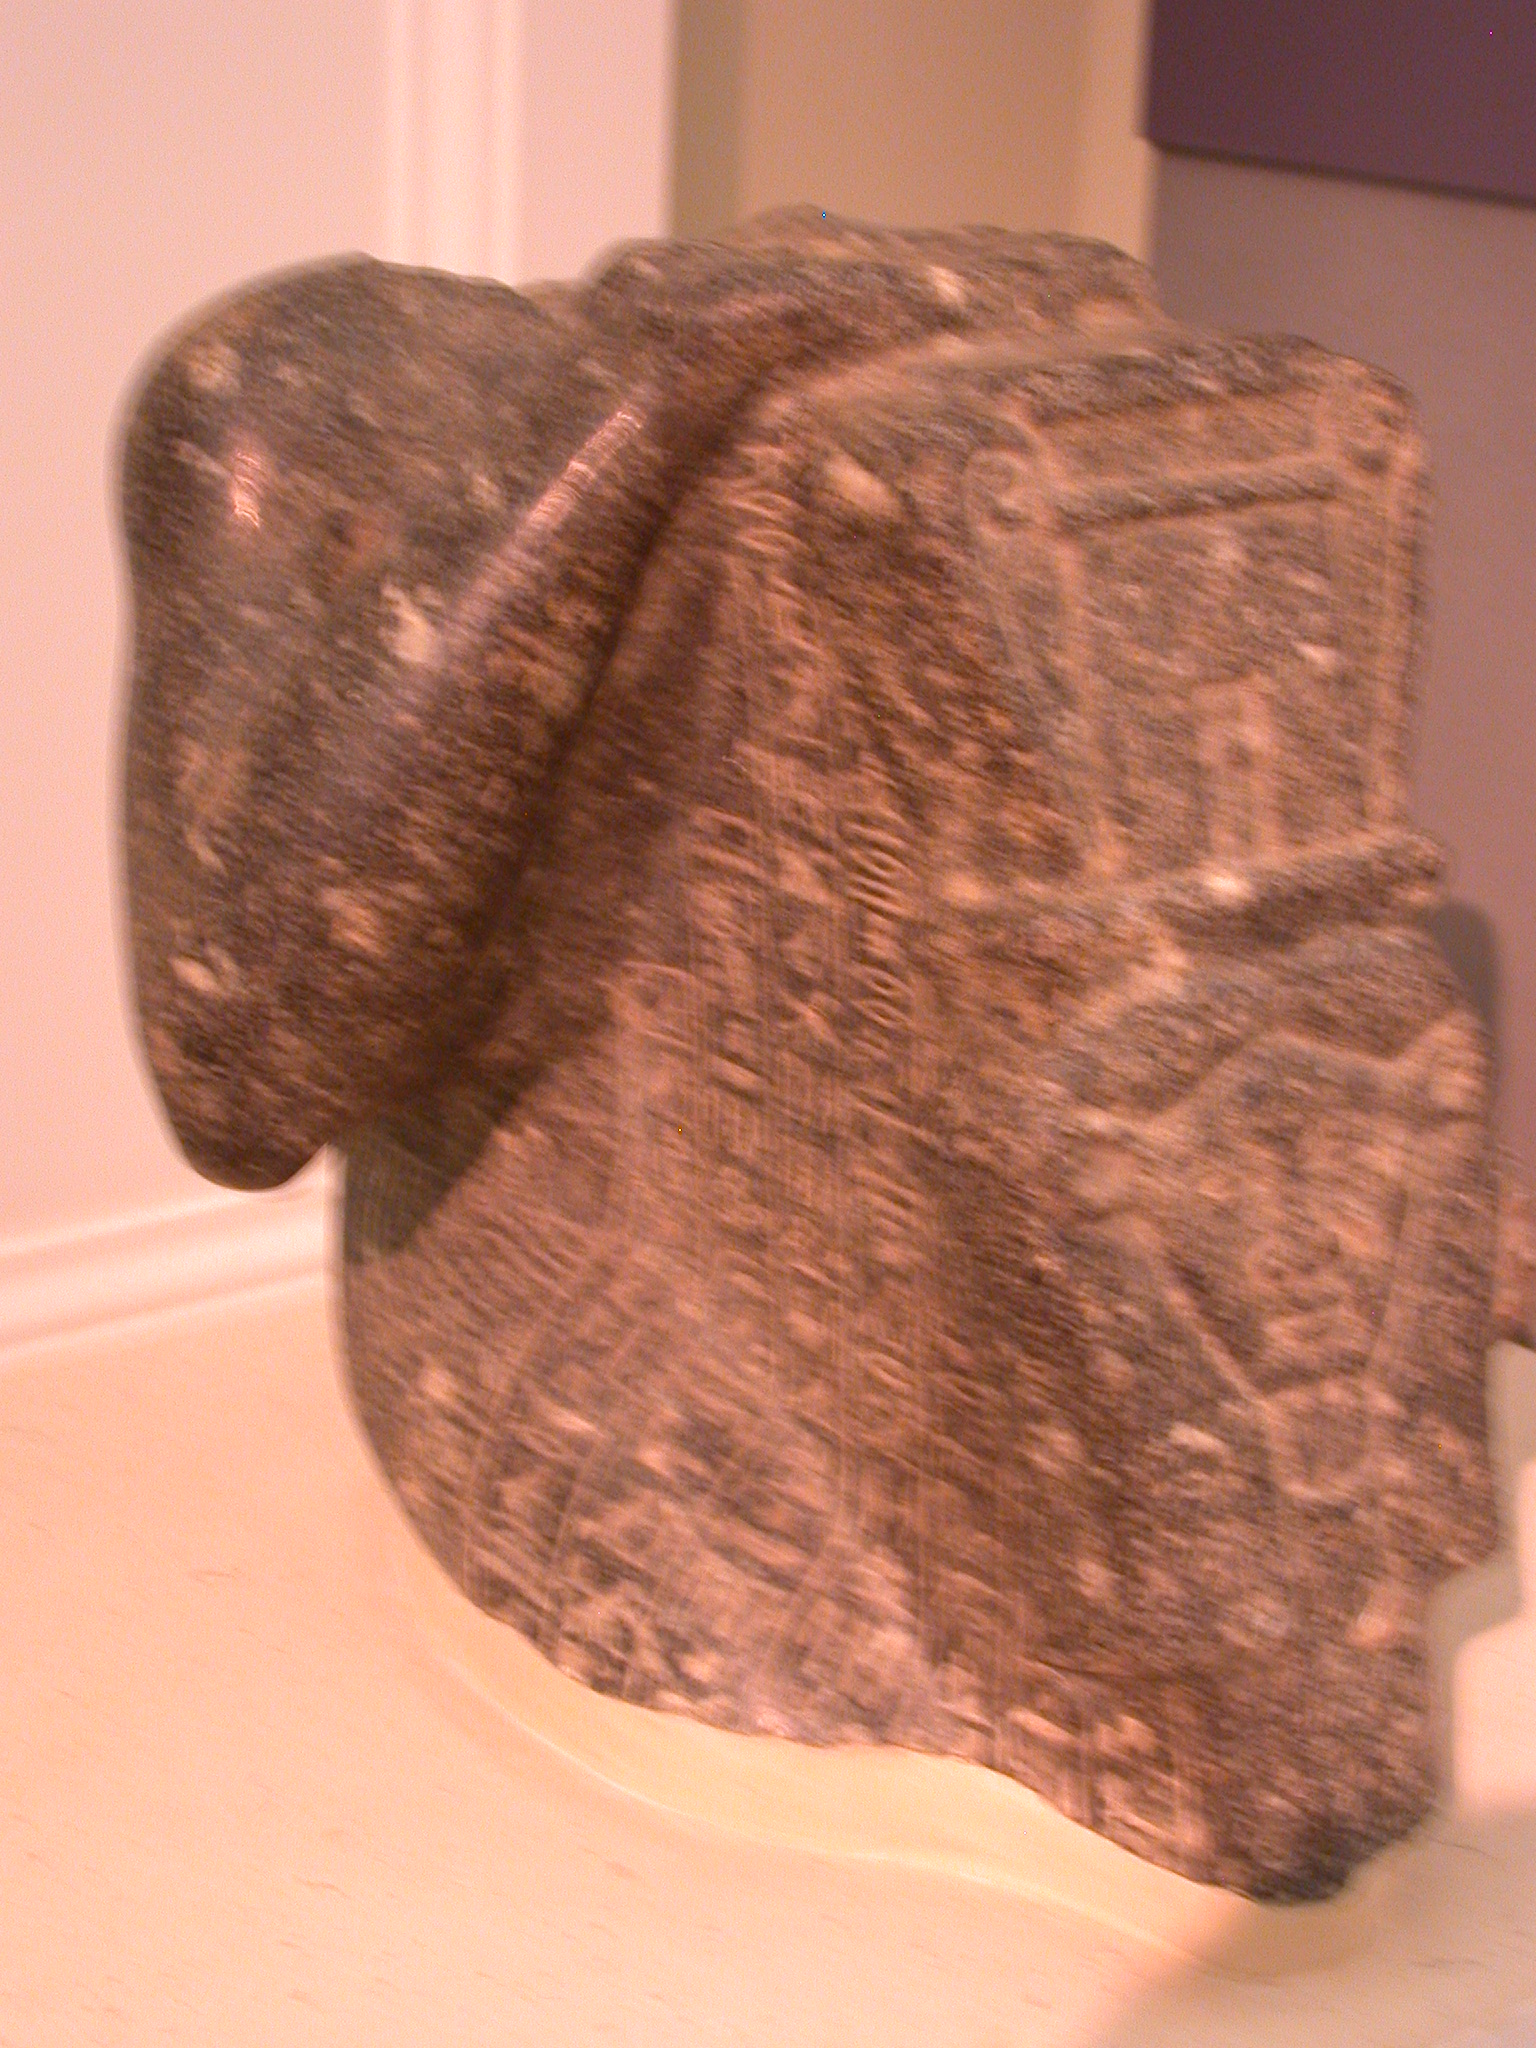 Statue of Priest Holding Large Sistrum in Form of Hathor, Granite, Late Period, 746-336 BCE, Mendes, Egypt, in Fitzwilliam Museum, Cambridge, England